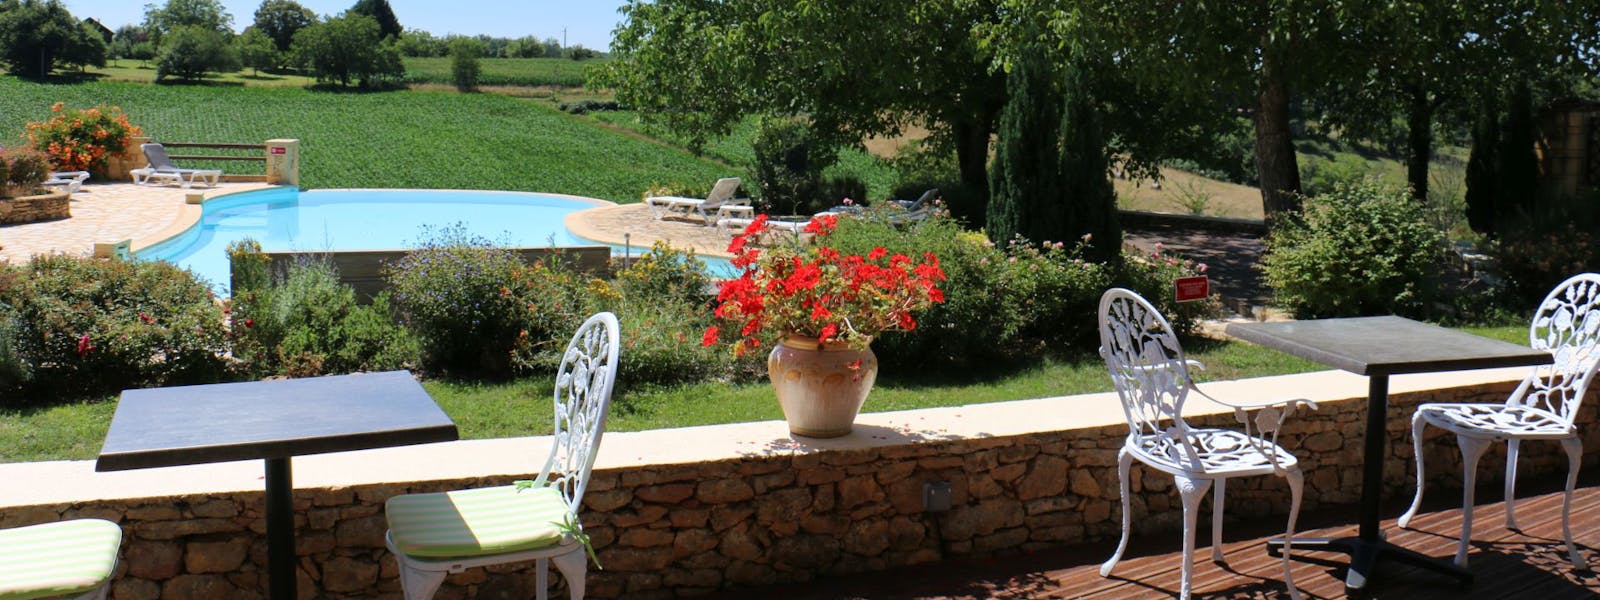 Hotel de charme, Sarlat, Perigord, Dordogne, avec piscine, groupe